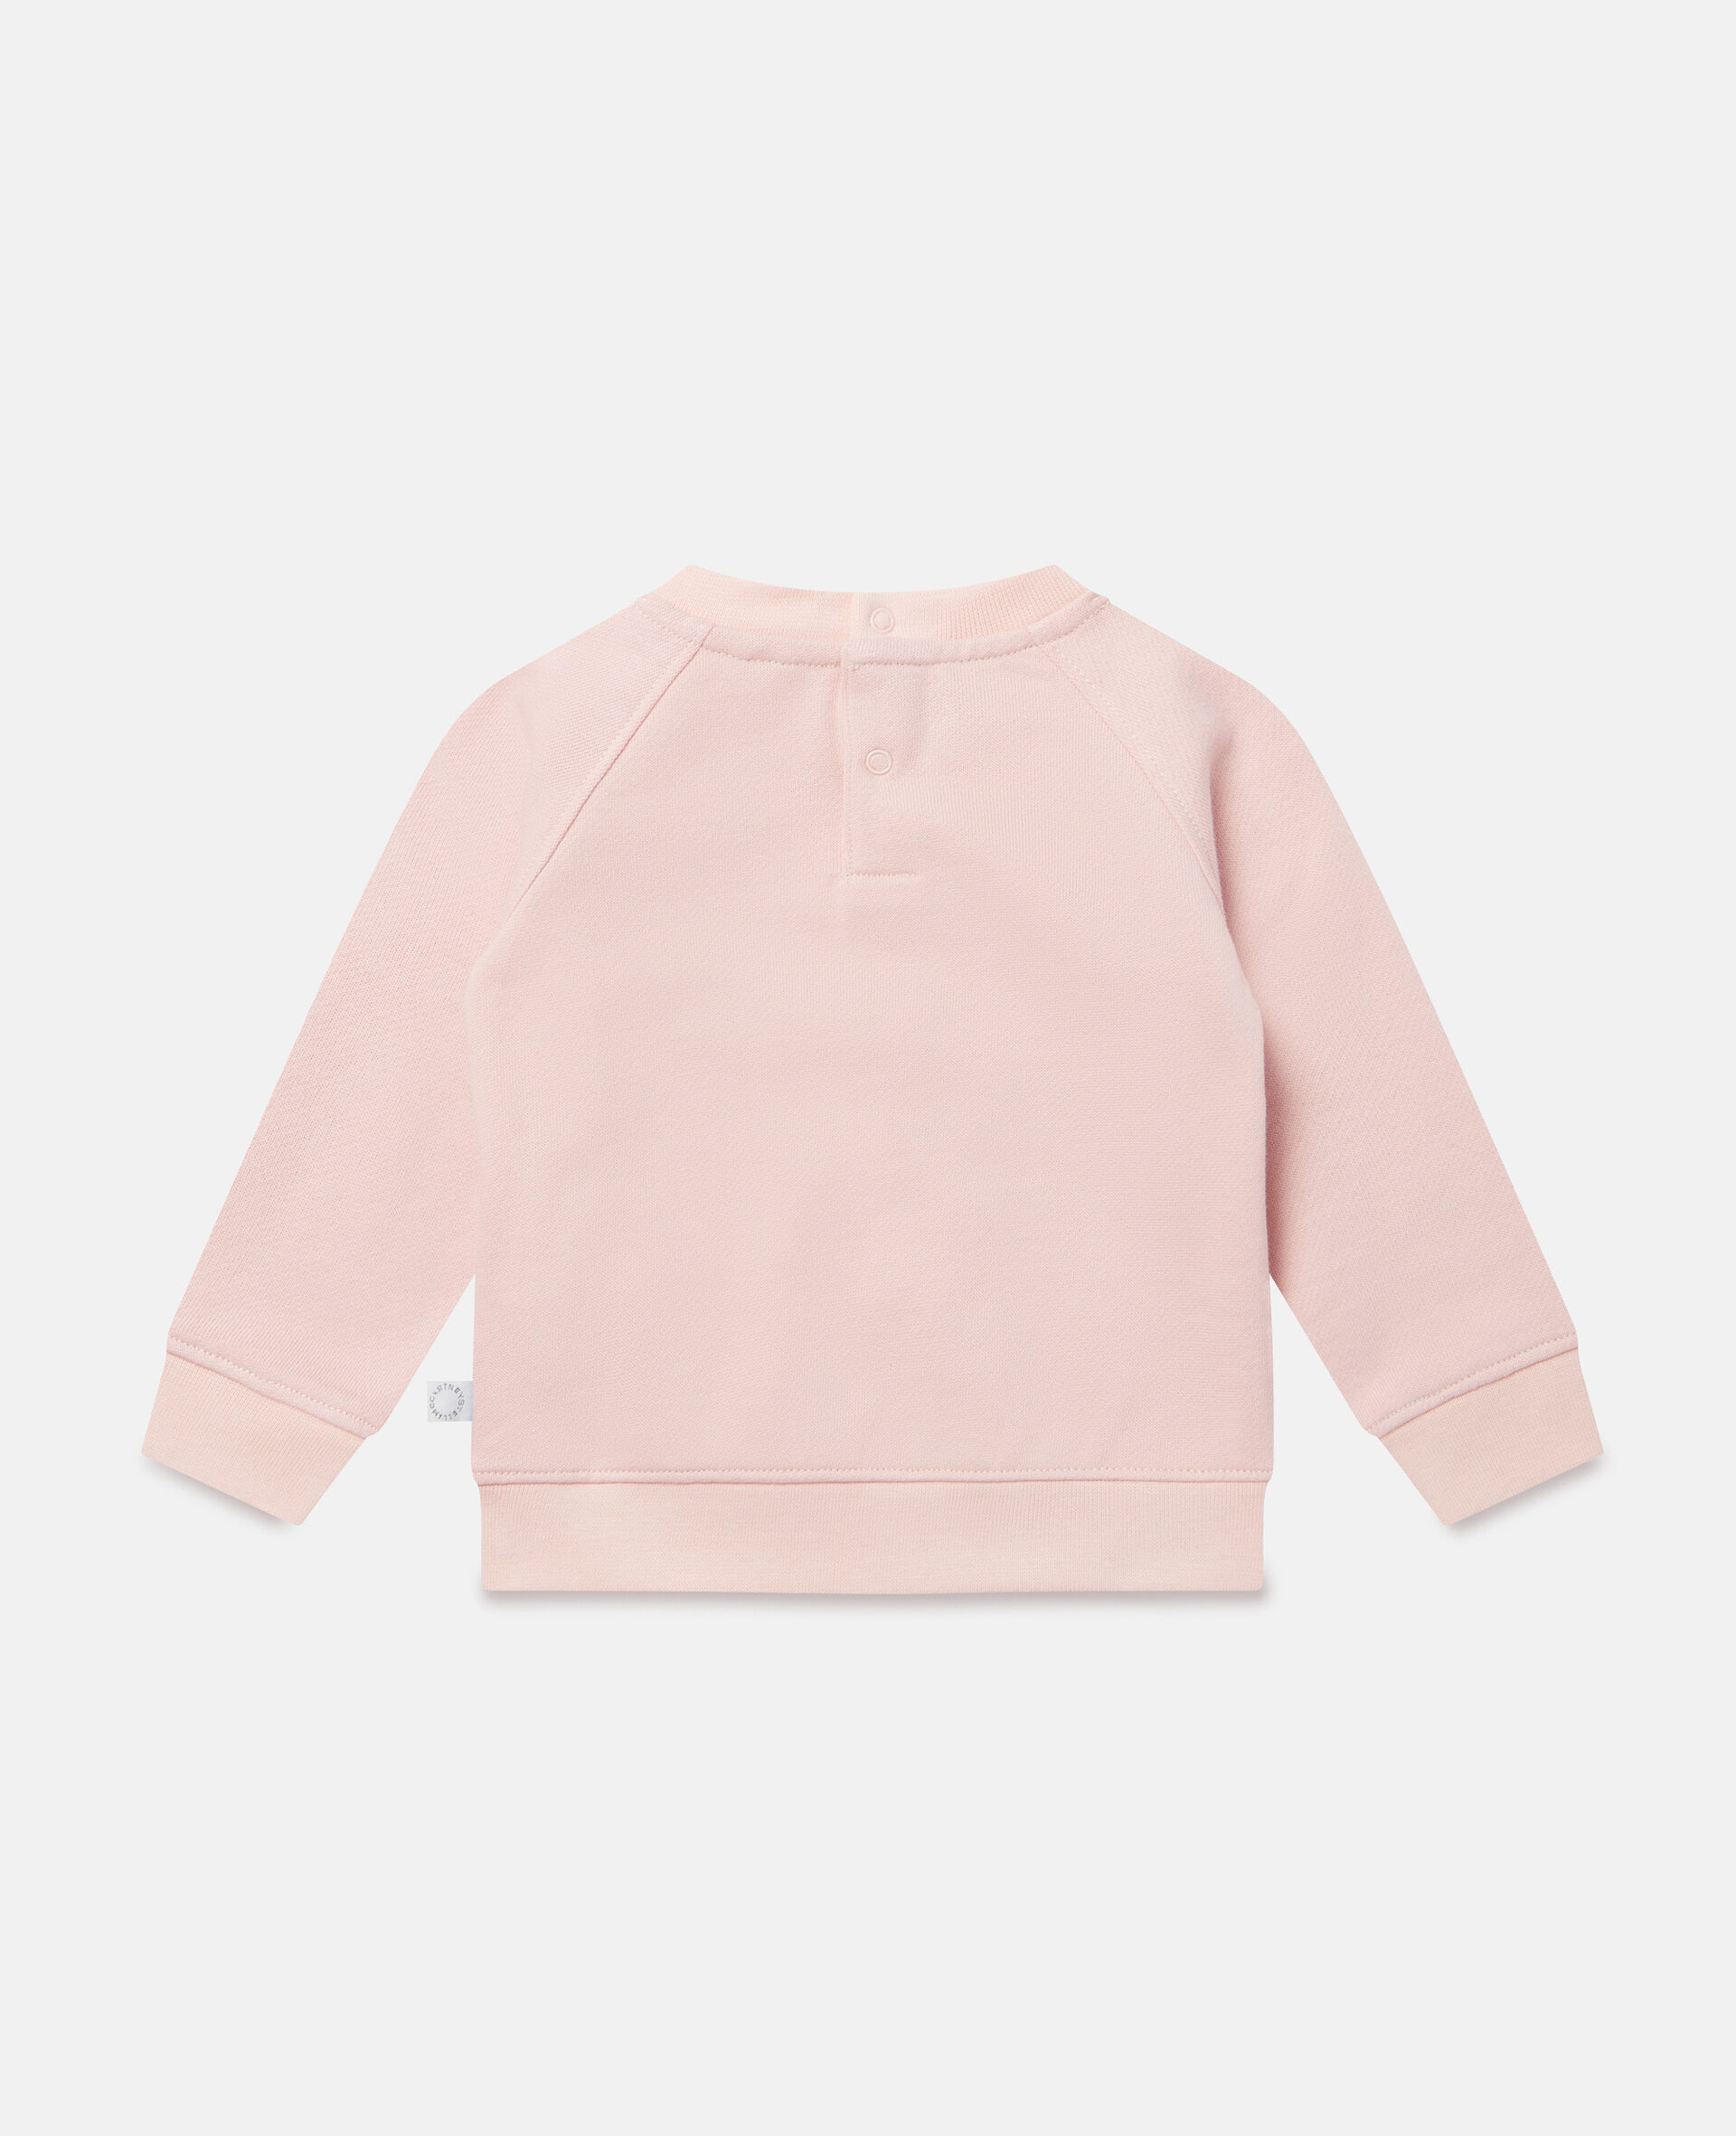 Cotton Fleece Funny Guys Print Sweatshirt-Pink-large image number 3